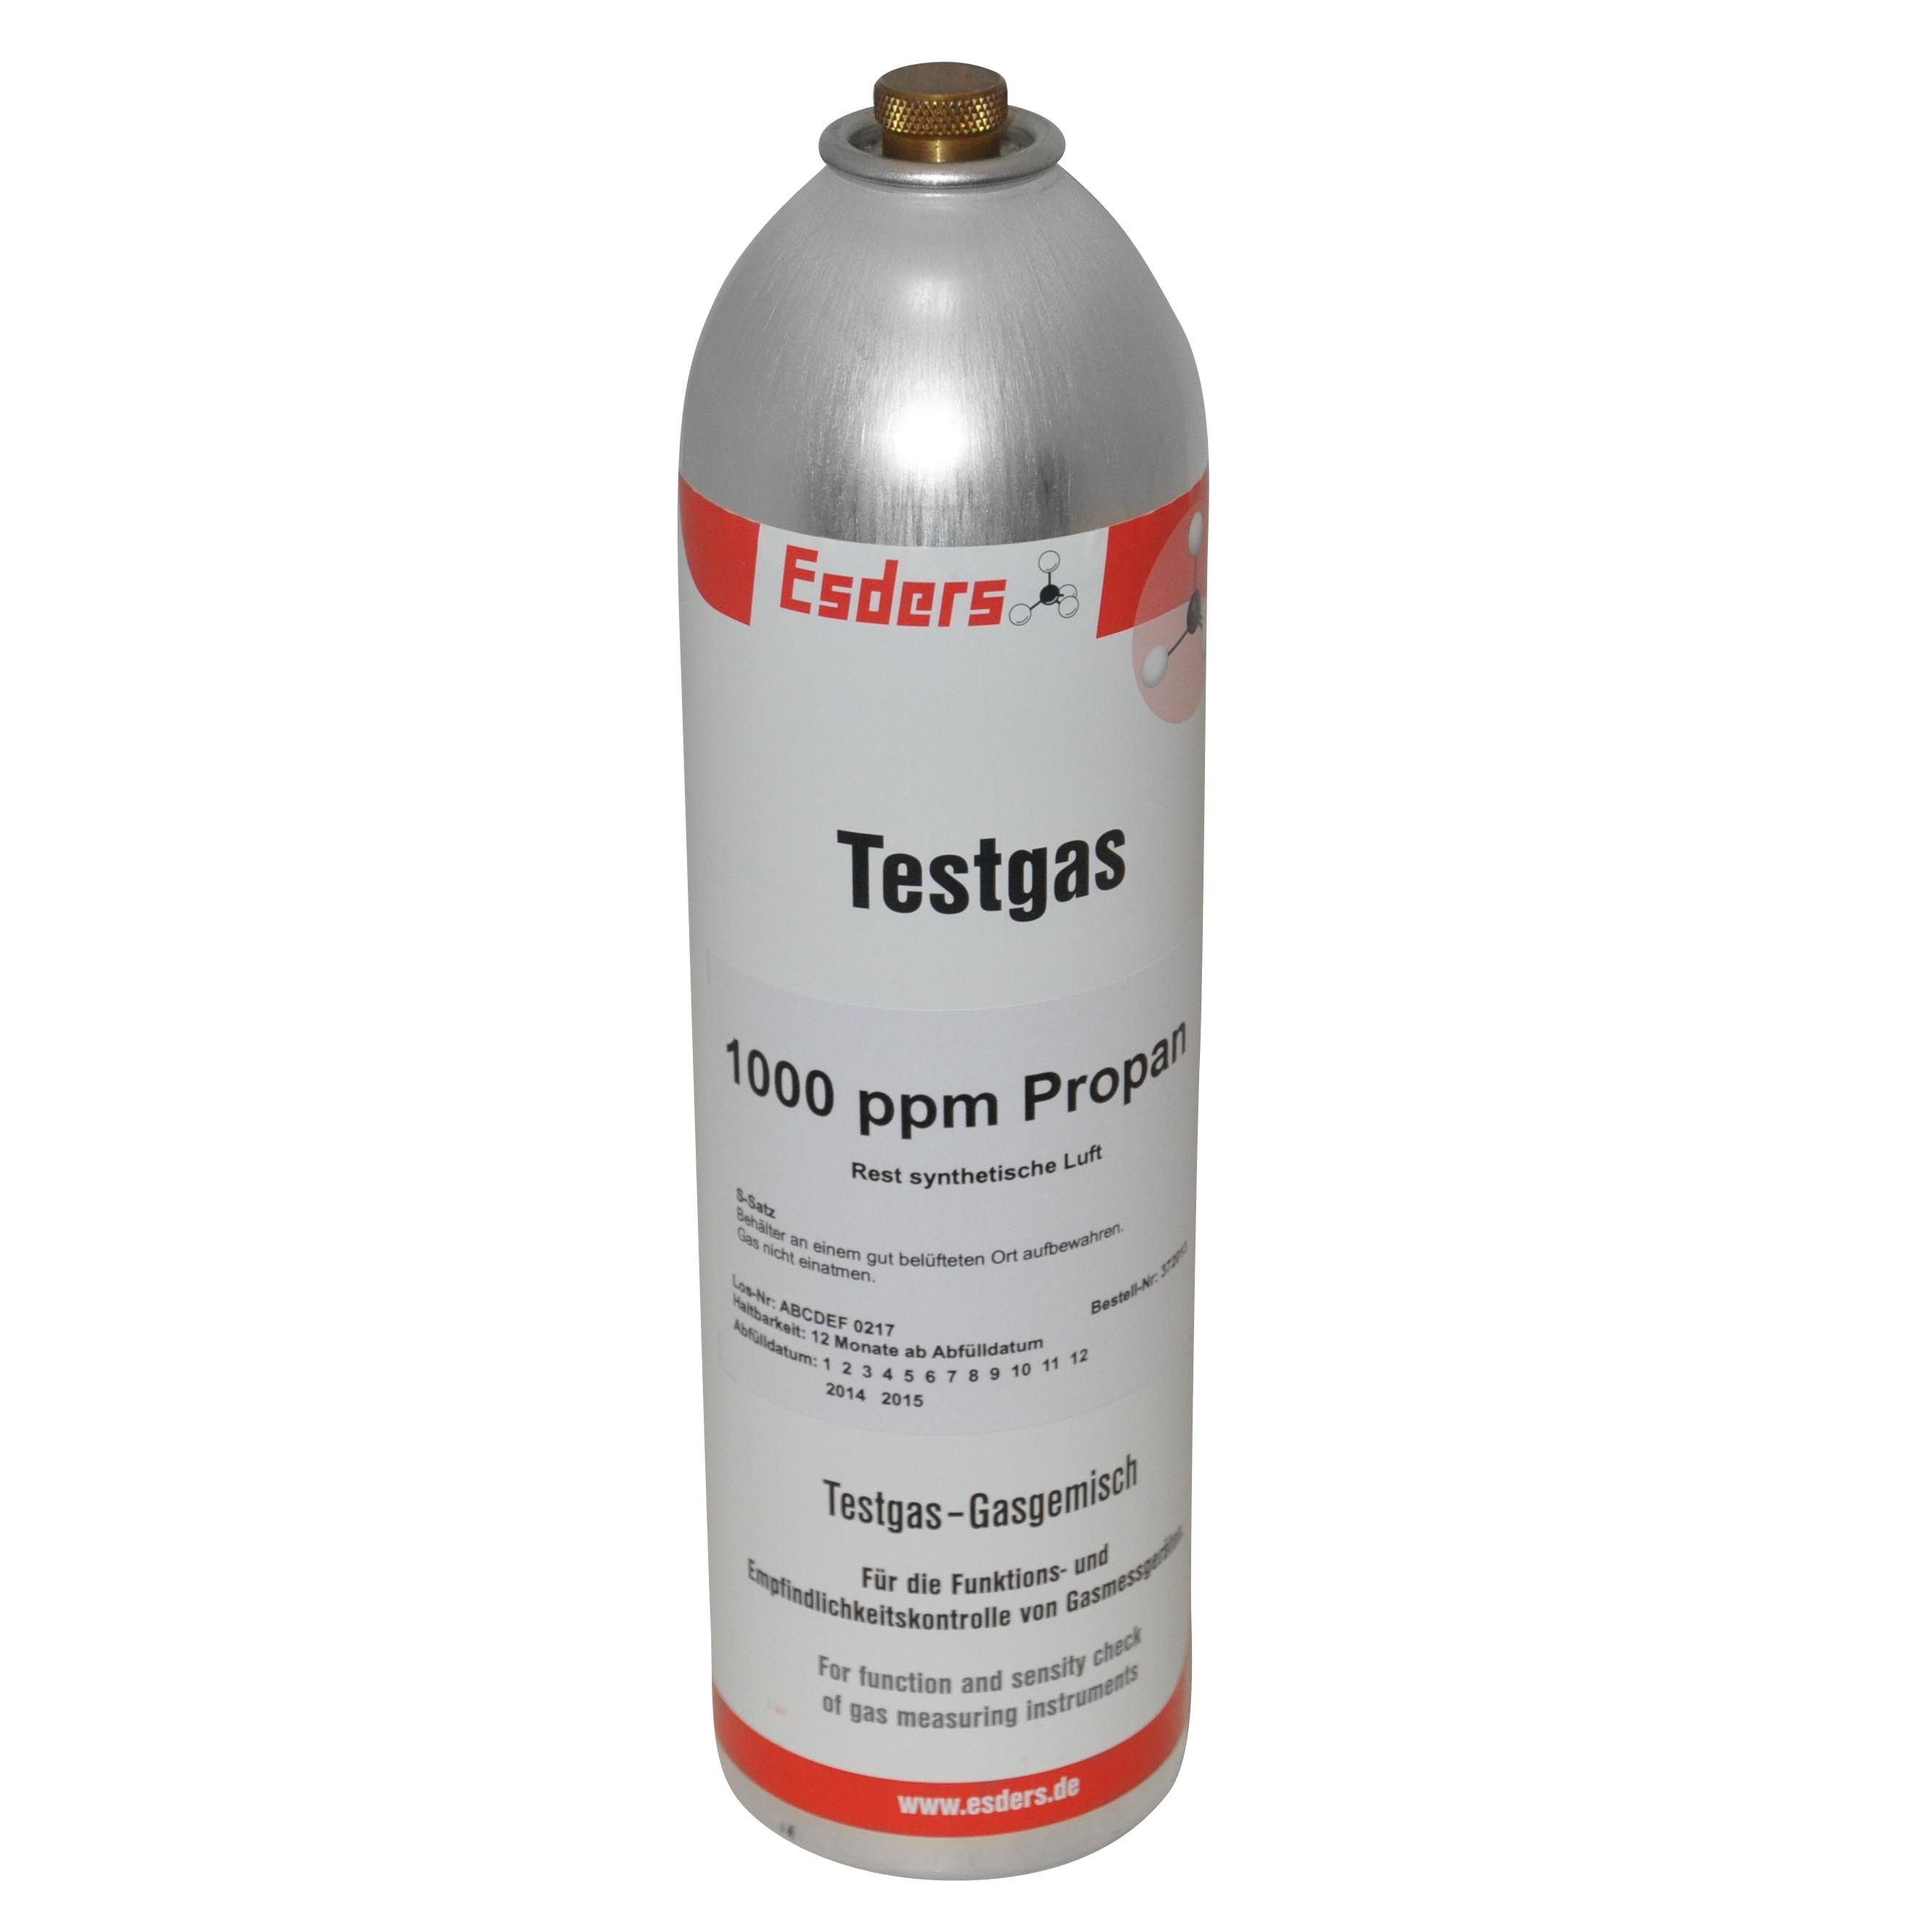 Test gas can 1000 ppm propane 1 l - 12 bar
